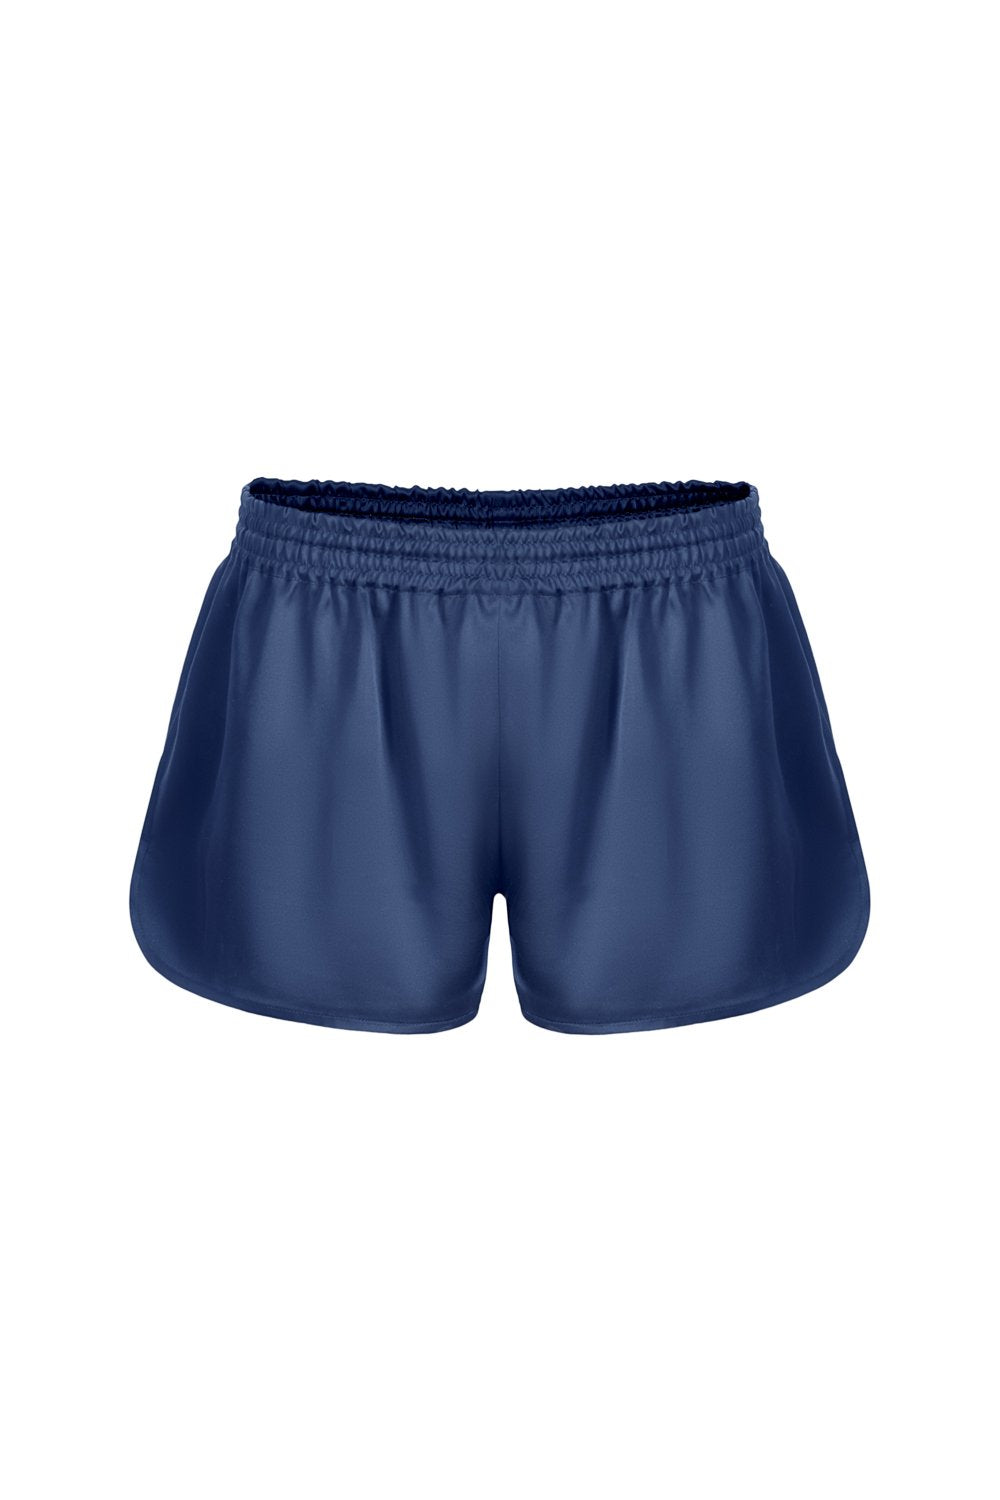 Silk Boxer Shorts in Navy Blue